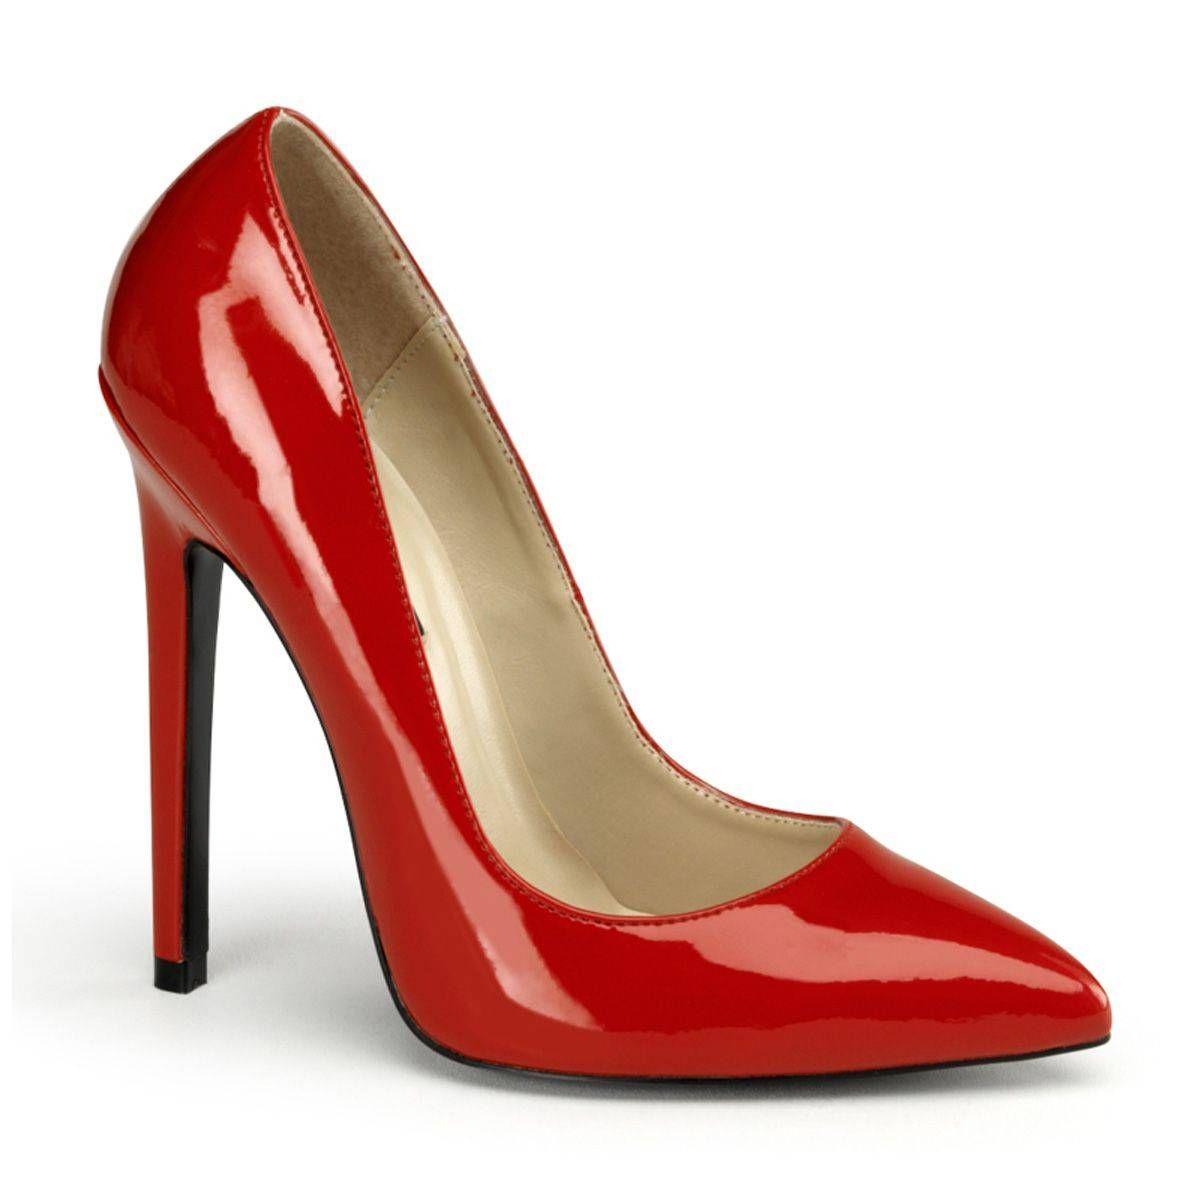 Unisex Red Patent Court Shoe